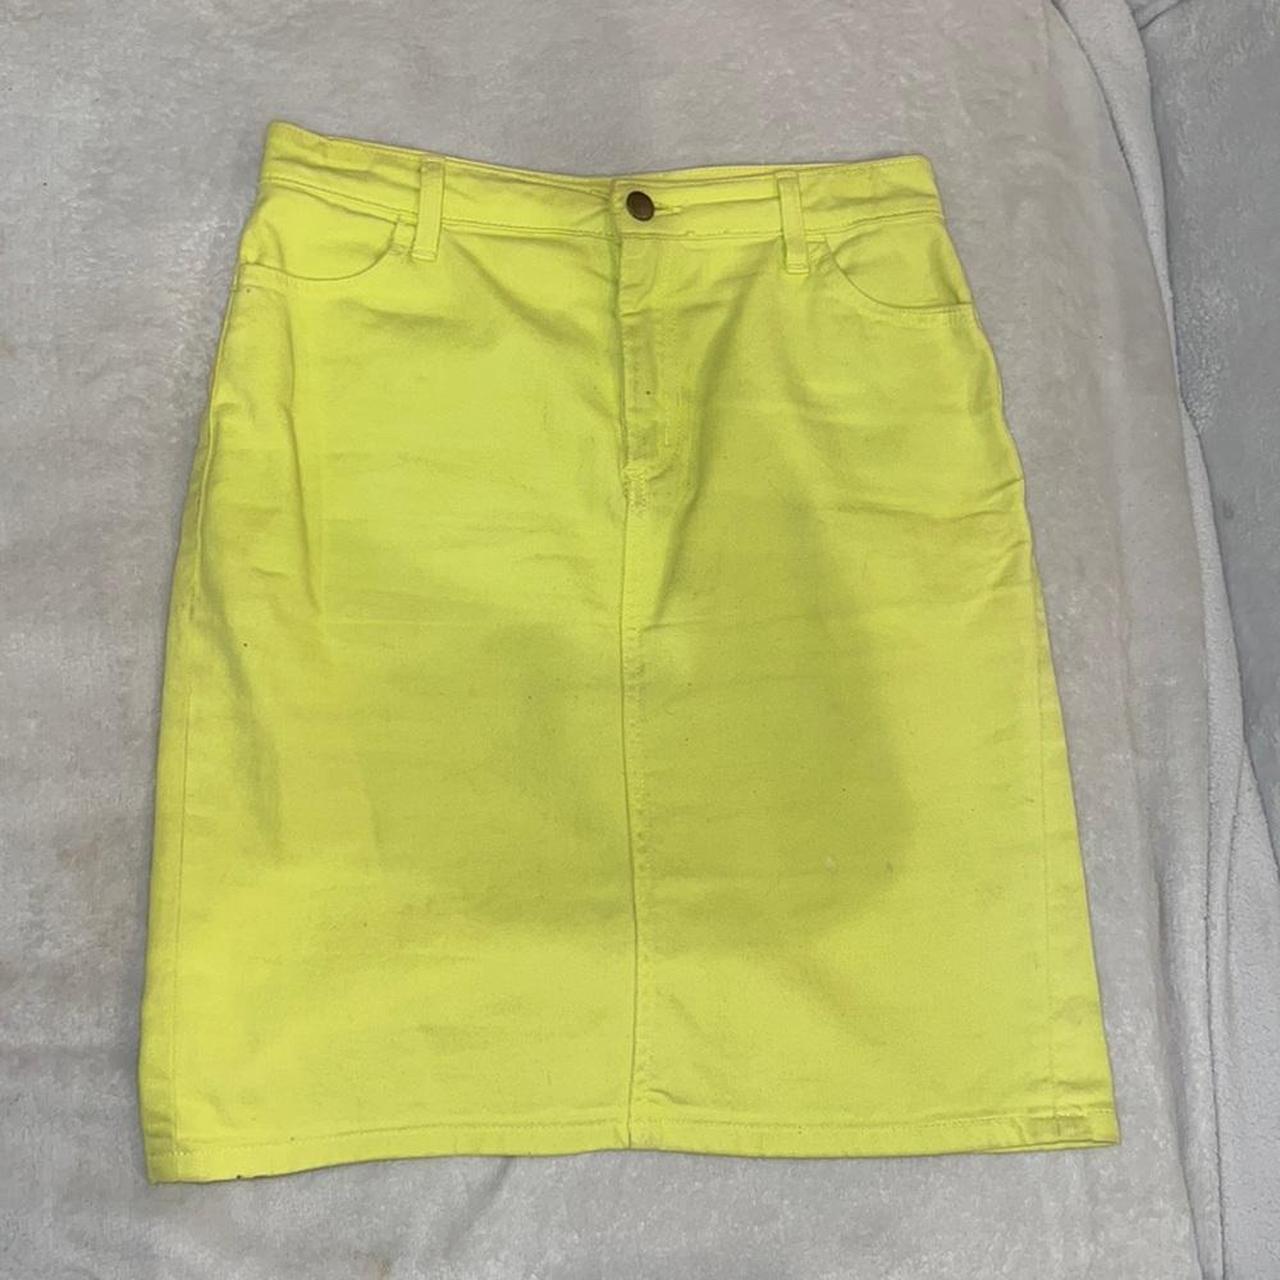 American Apparel Women's Yellow Skirt